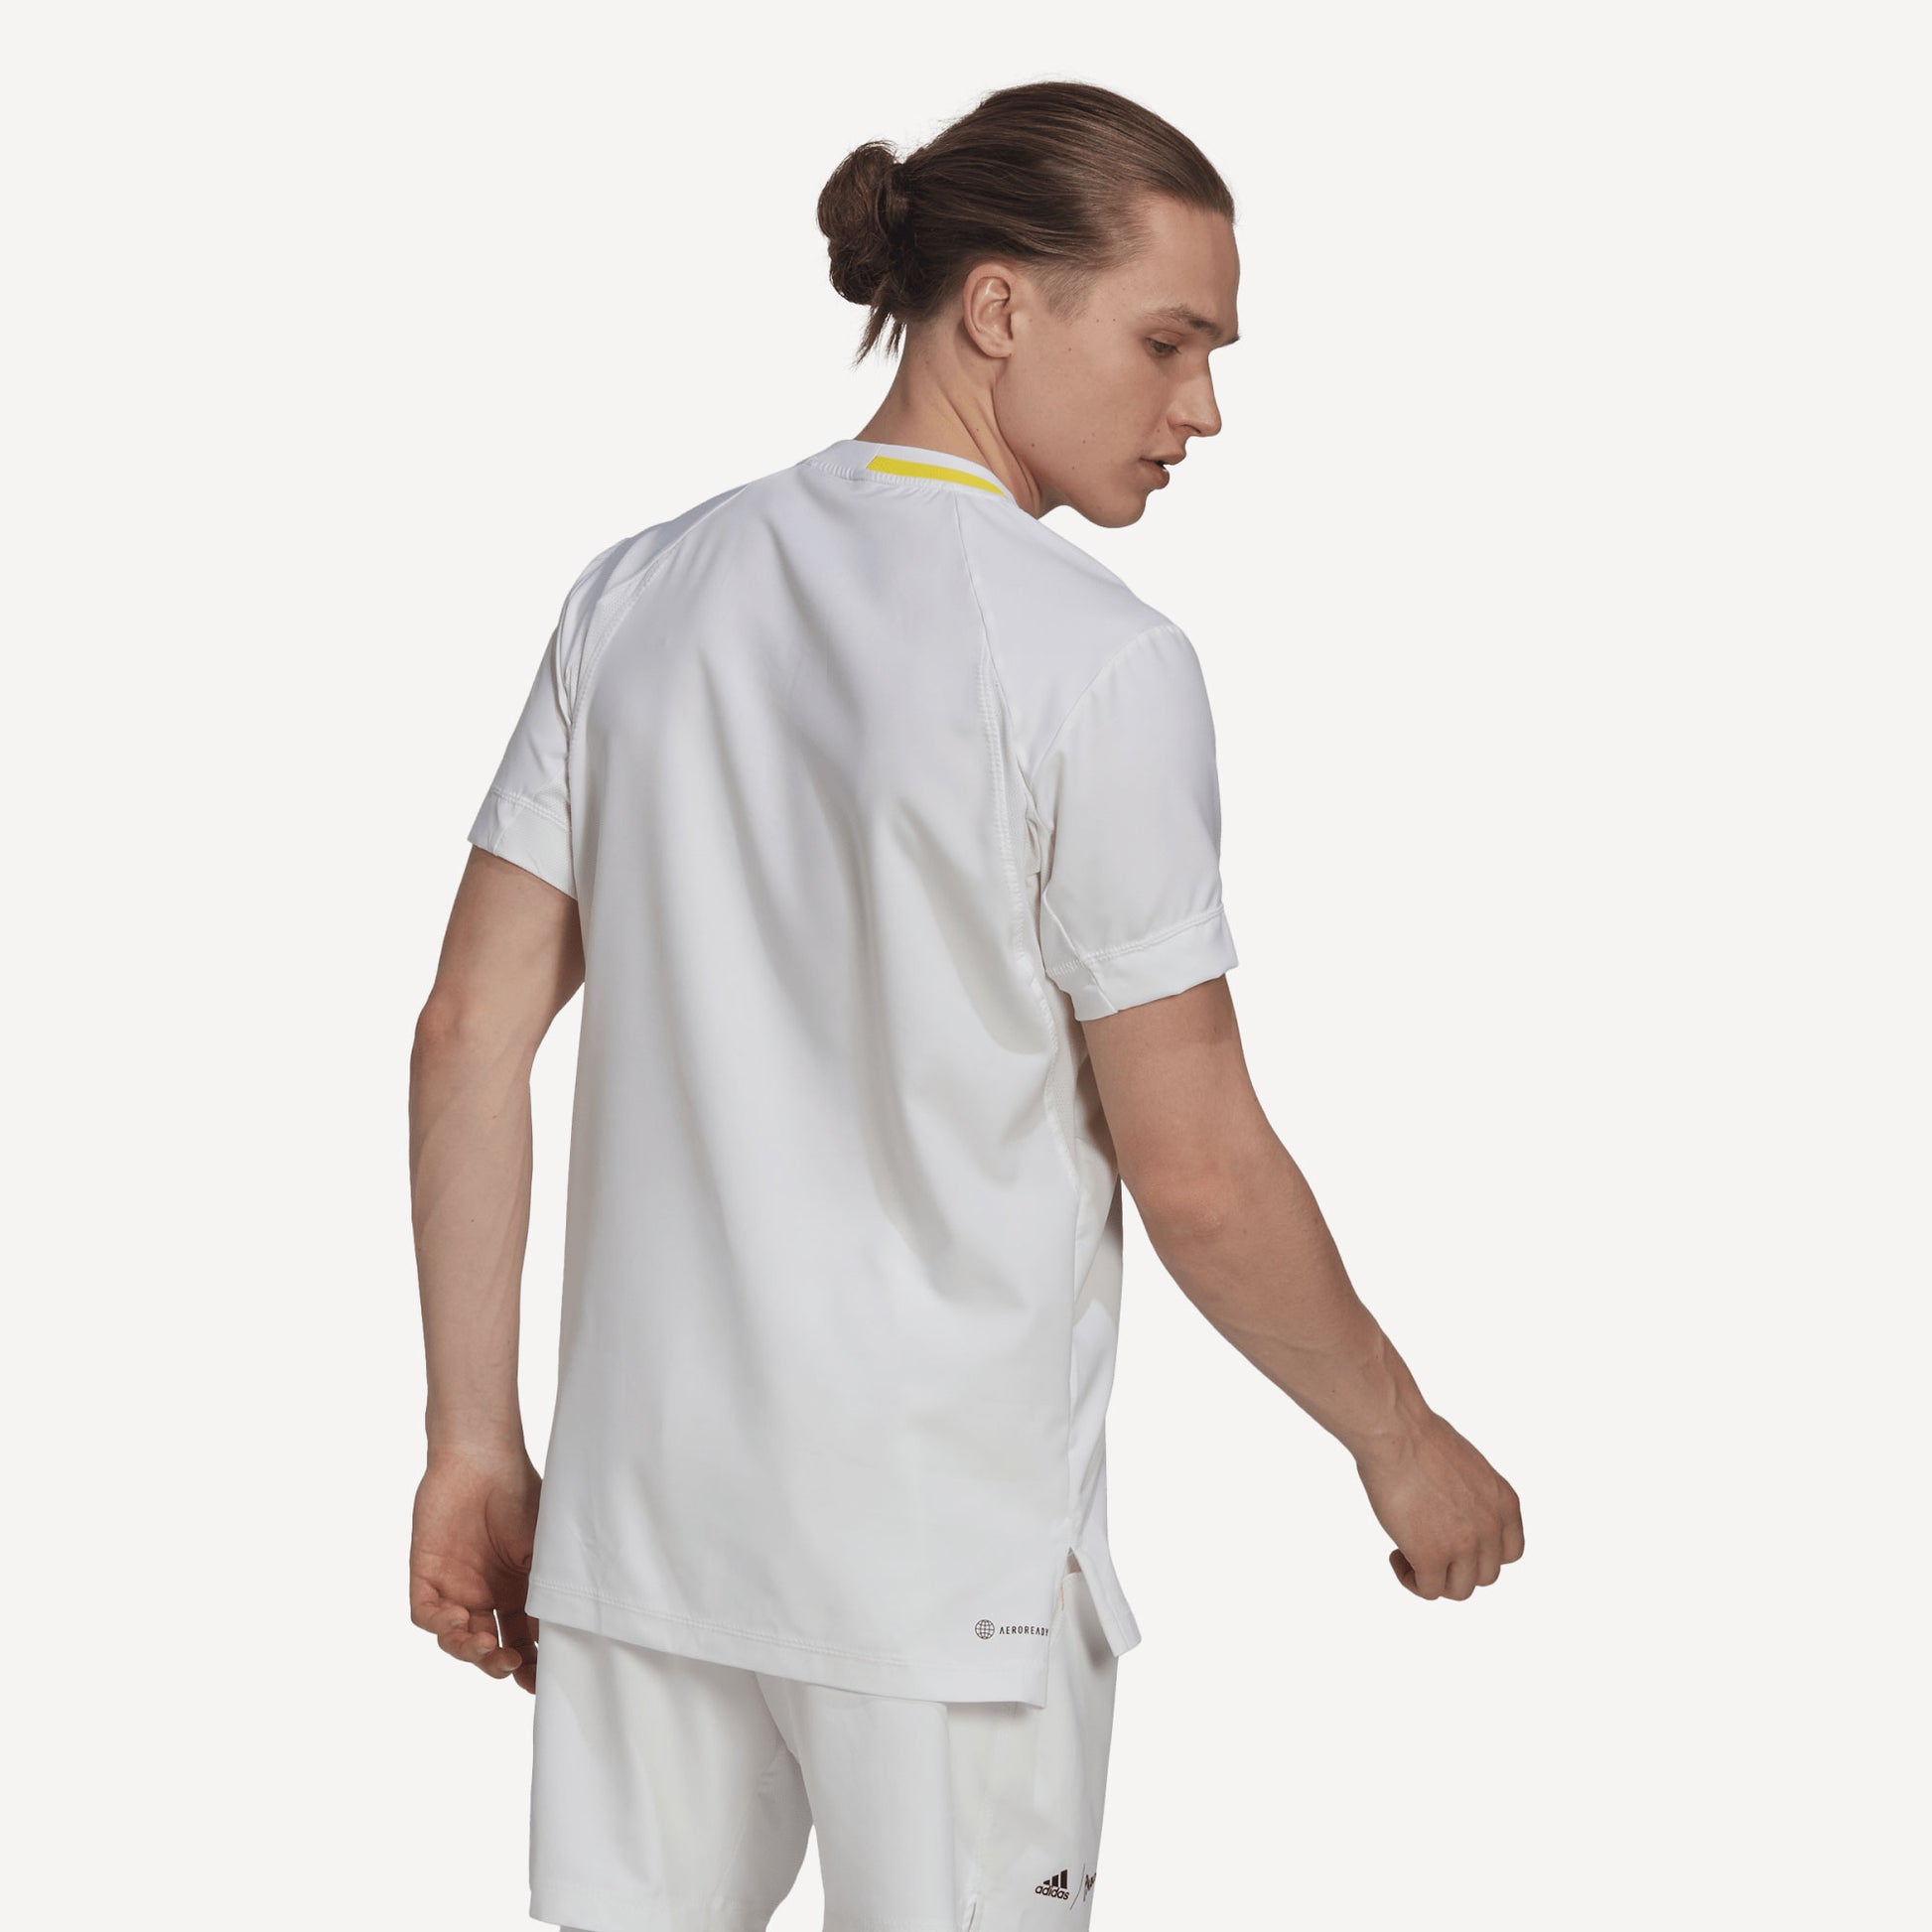 adidas London Men's Stretch Woven Tennis Shirt White (2)